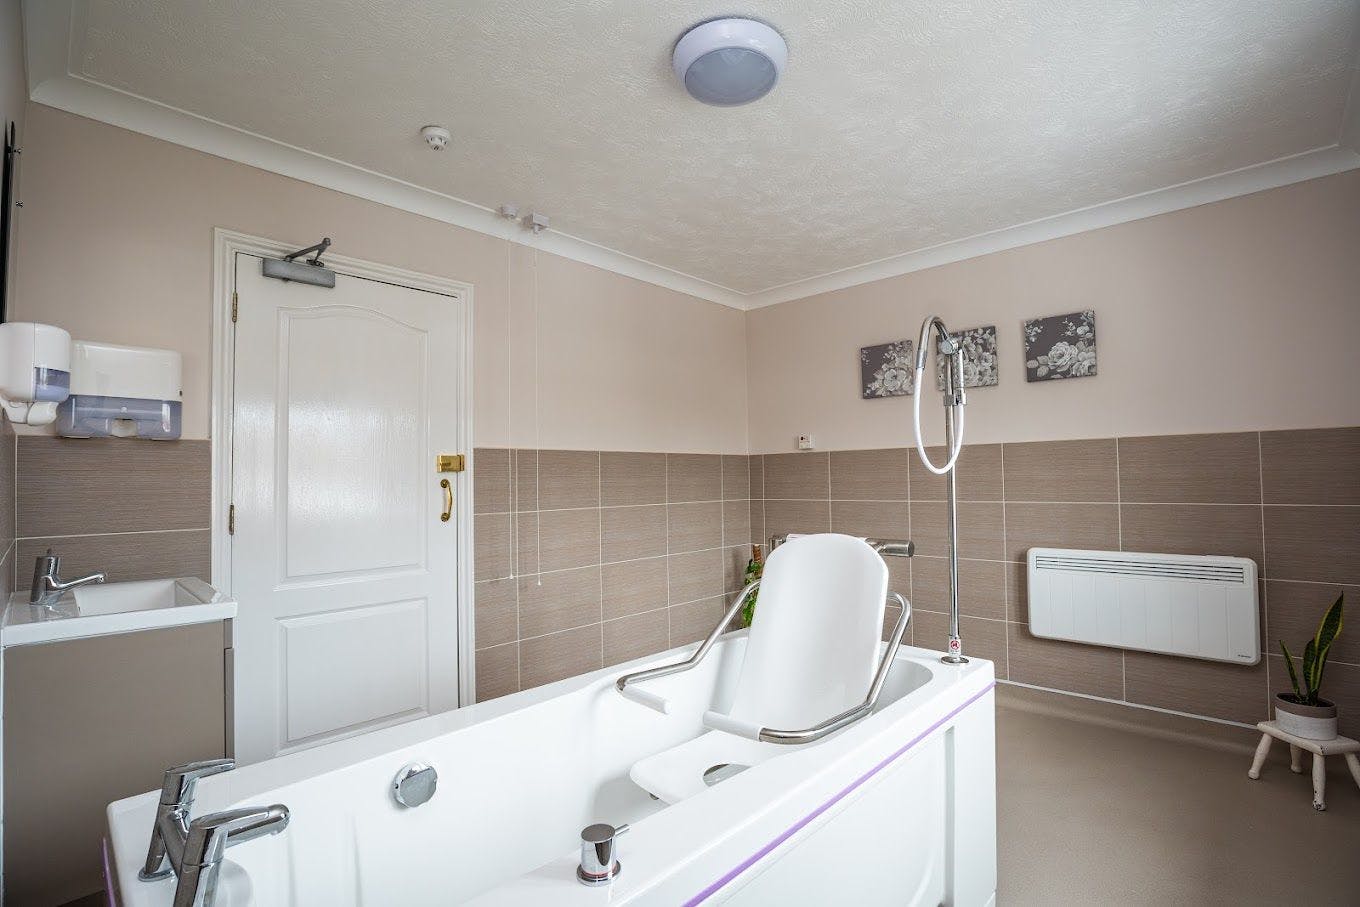 Bathroom of Oakland Court care home in Bognor Regis